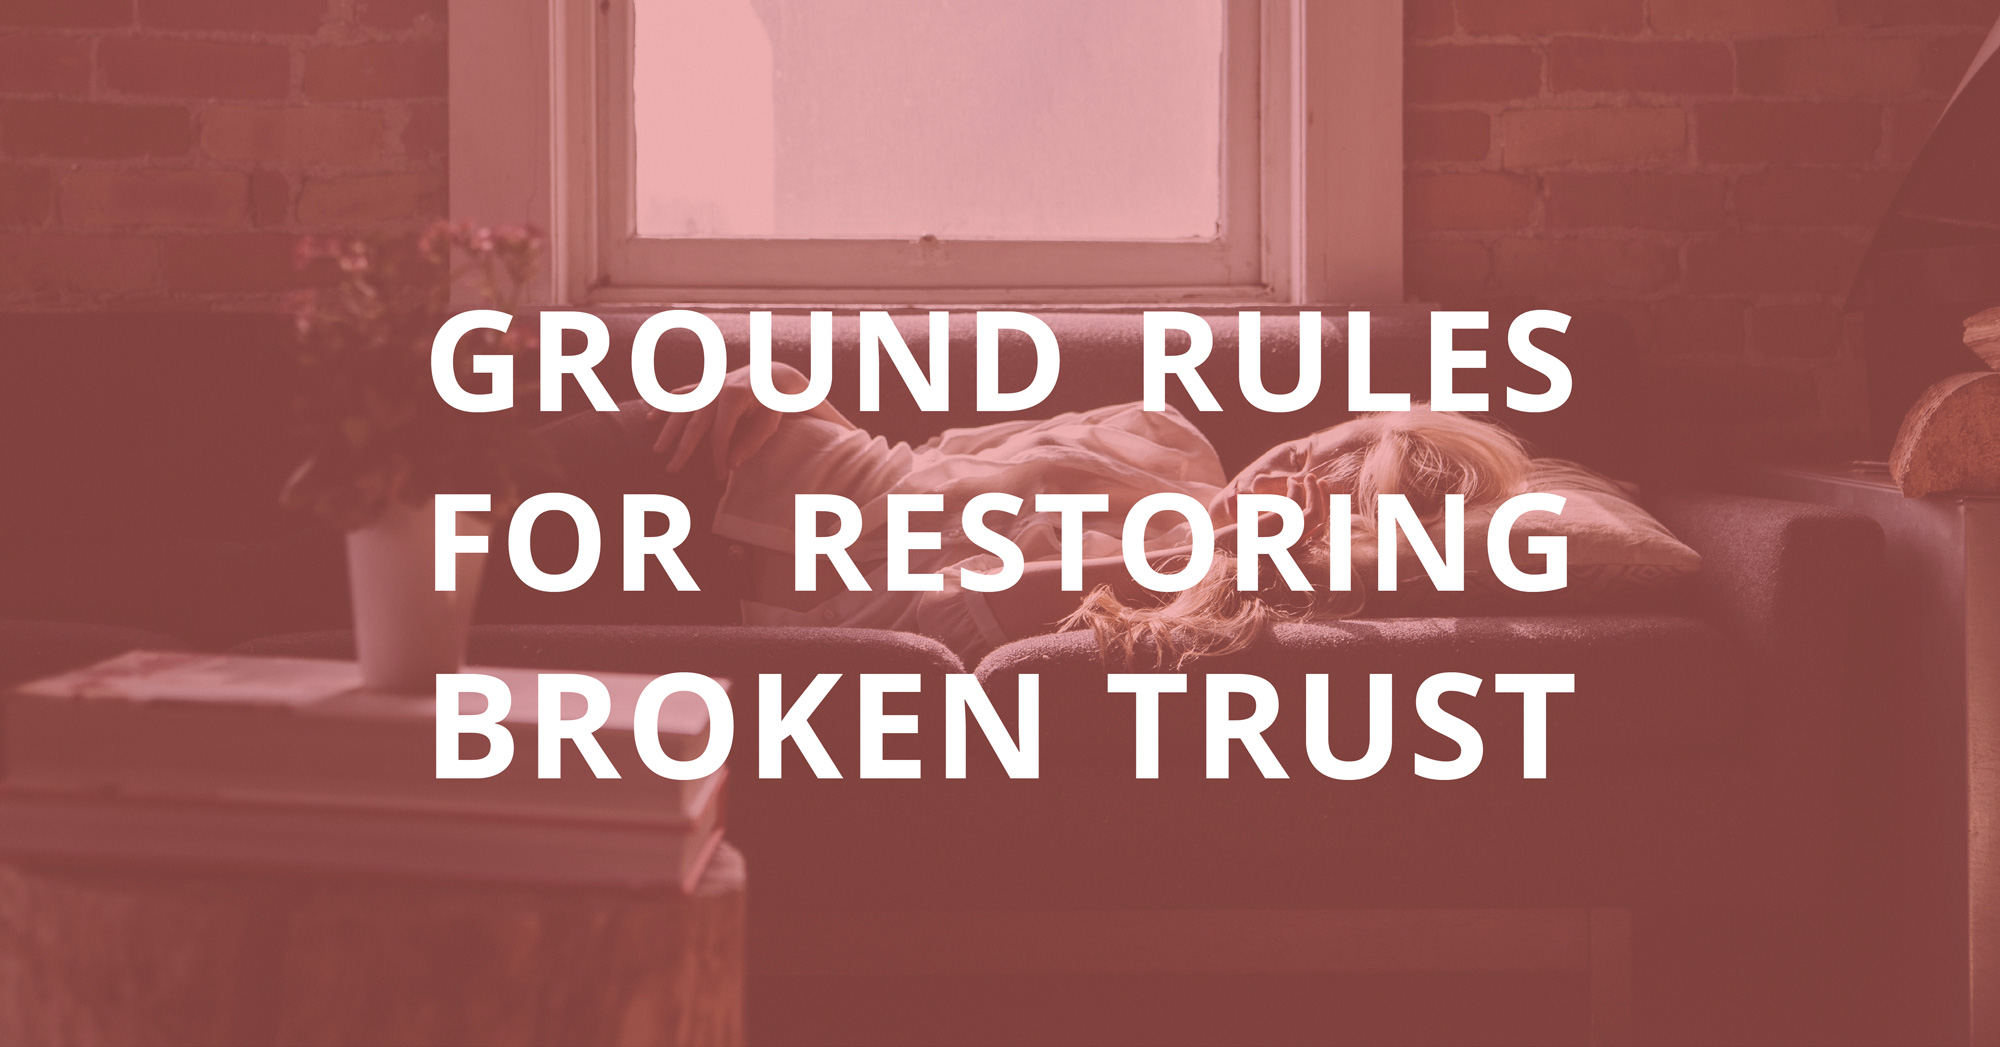 Ground Rules for Restoring Broken Trust